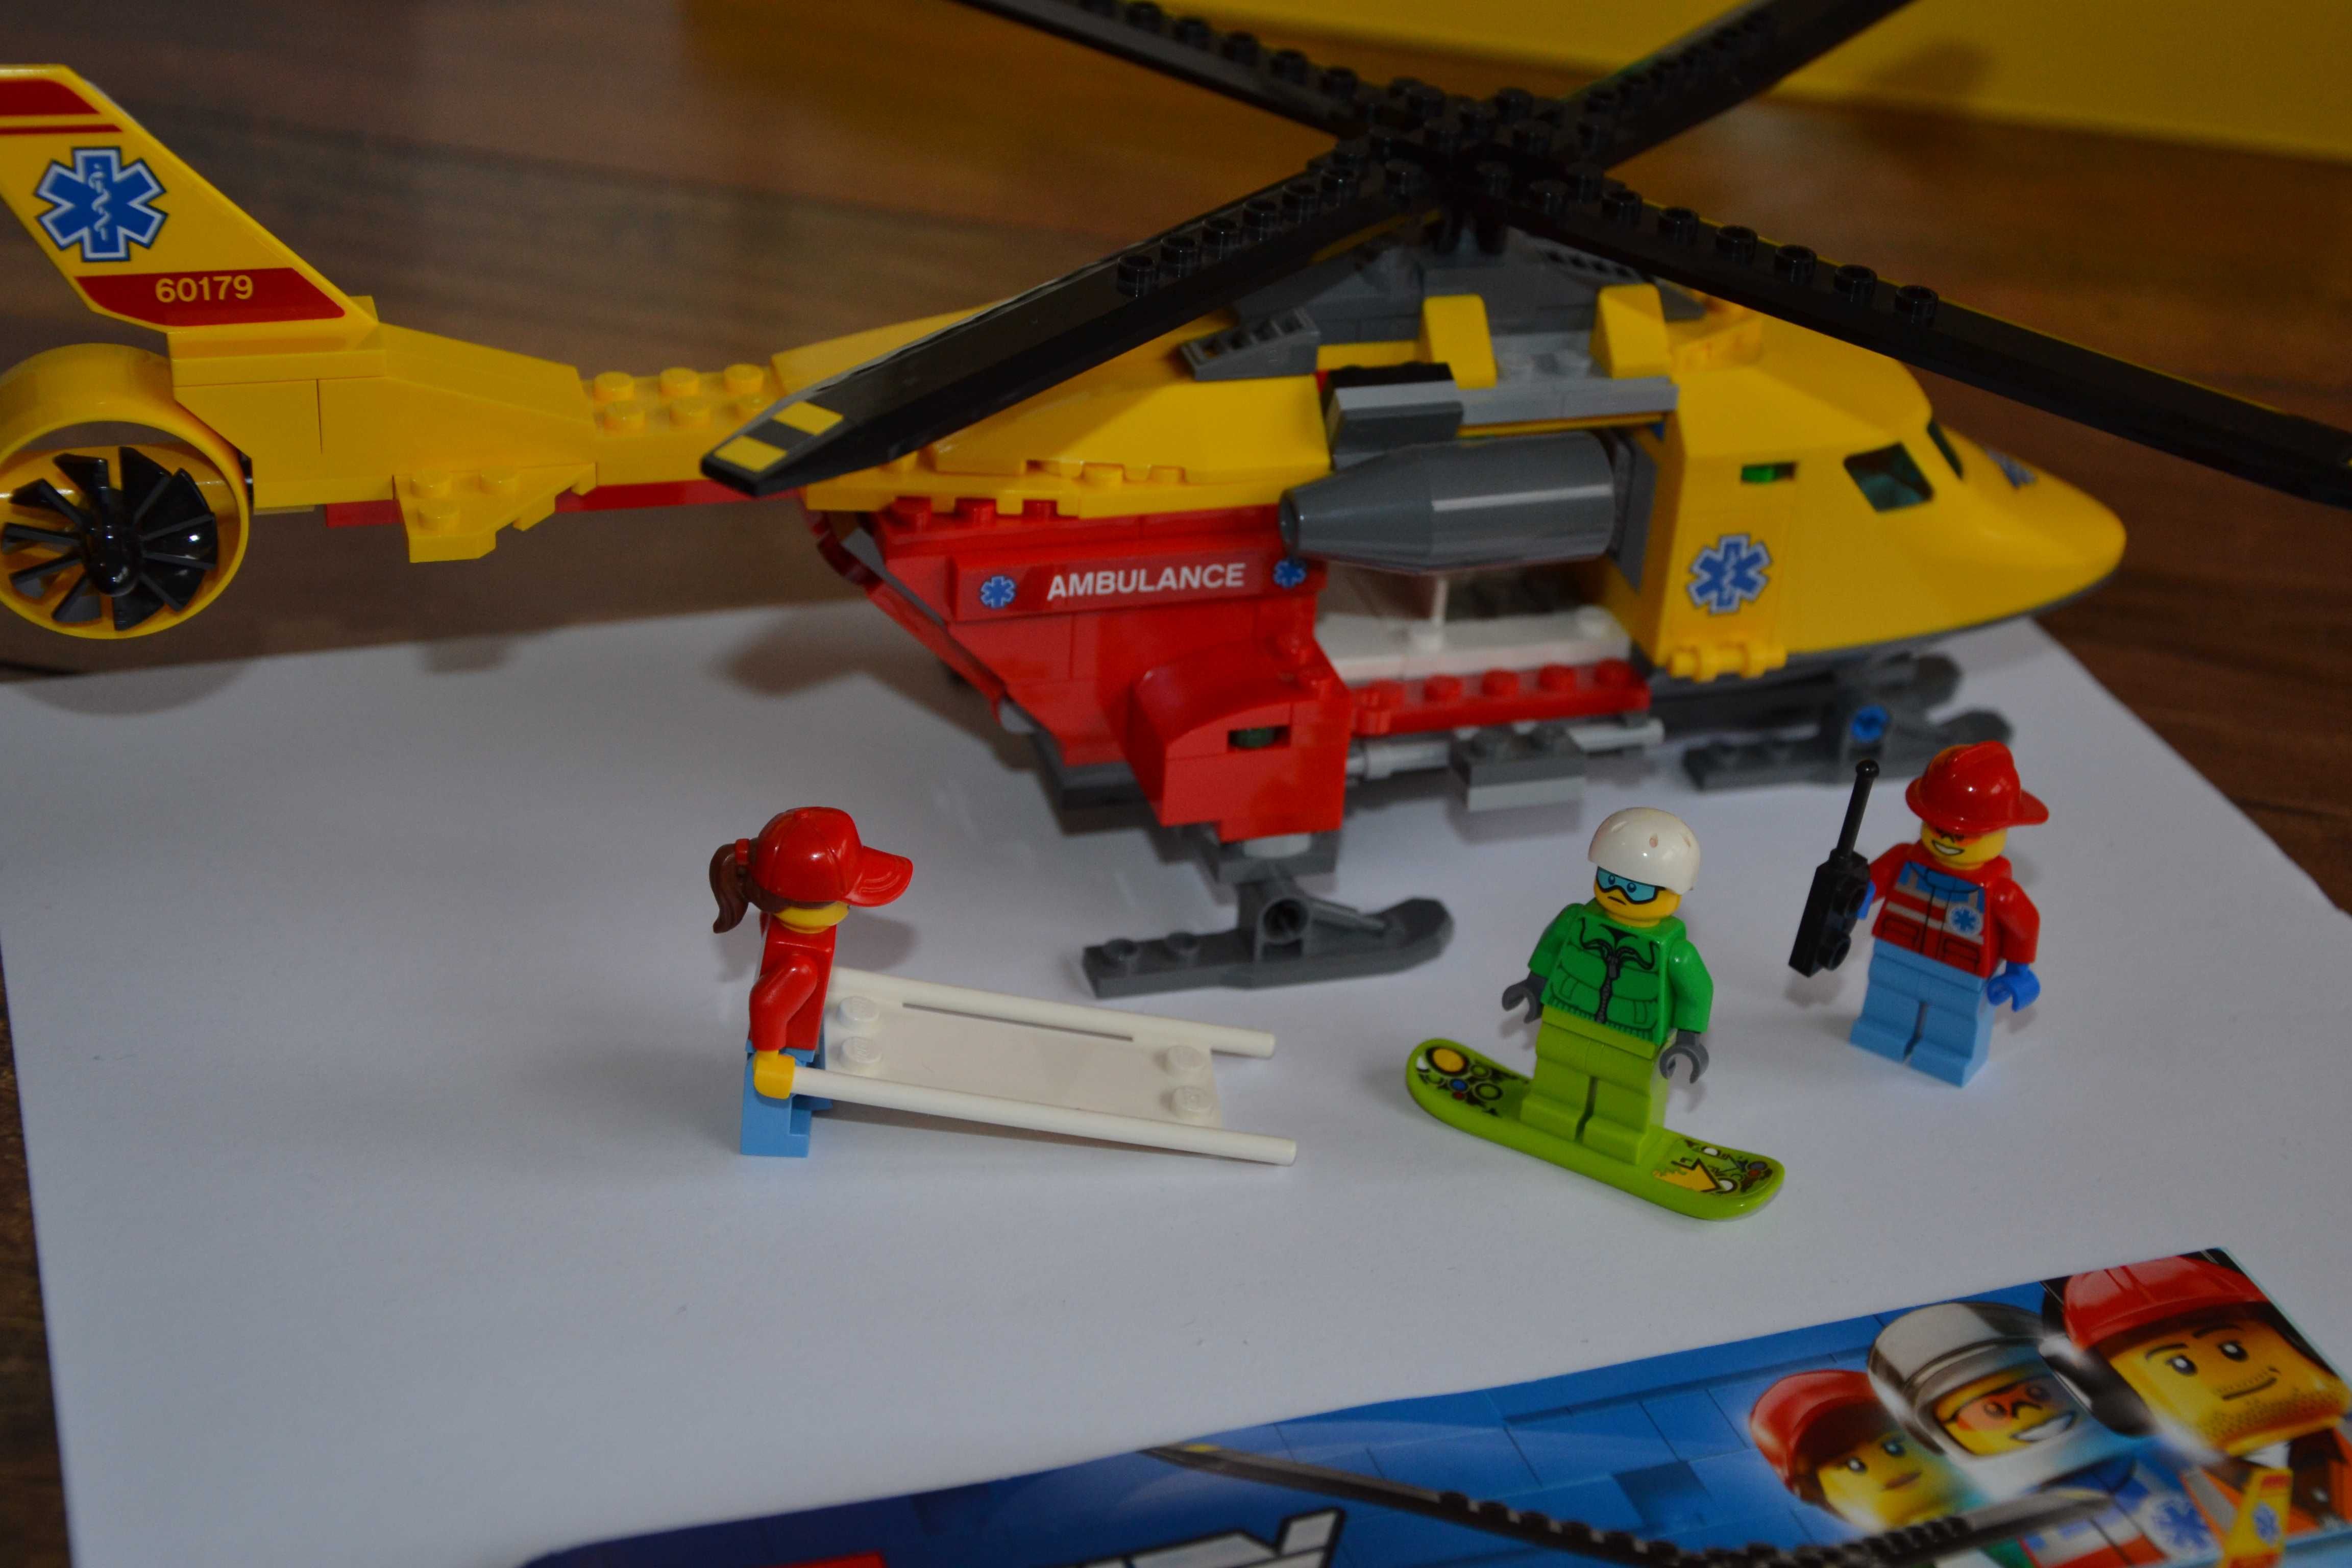 Kонструктор Lego 60179 медицински хеликоптер